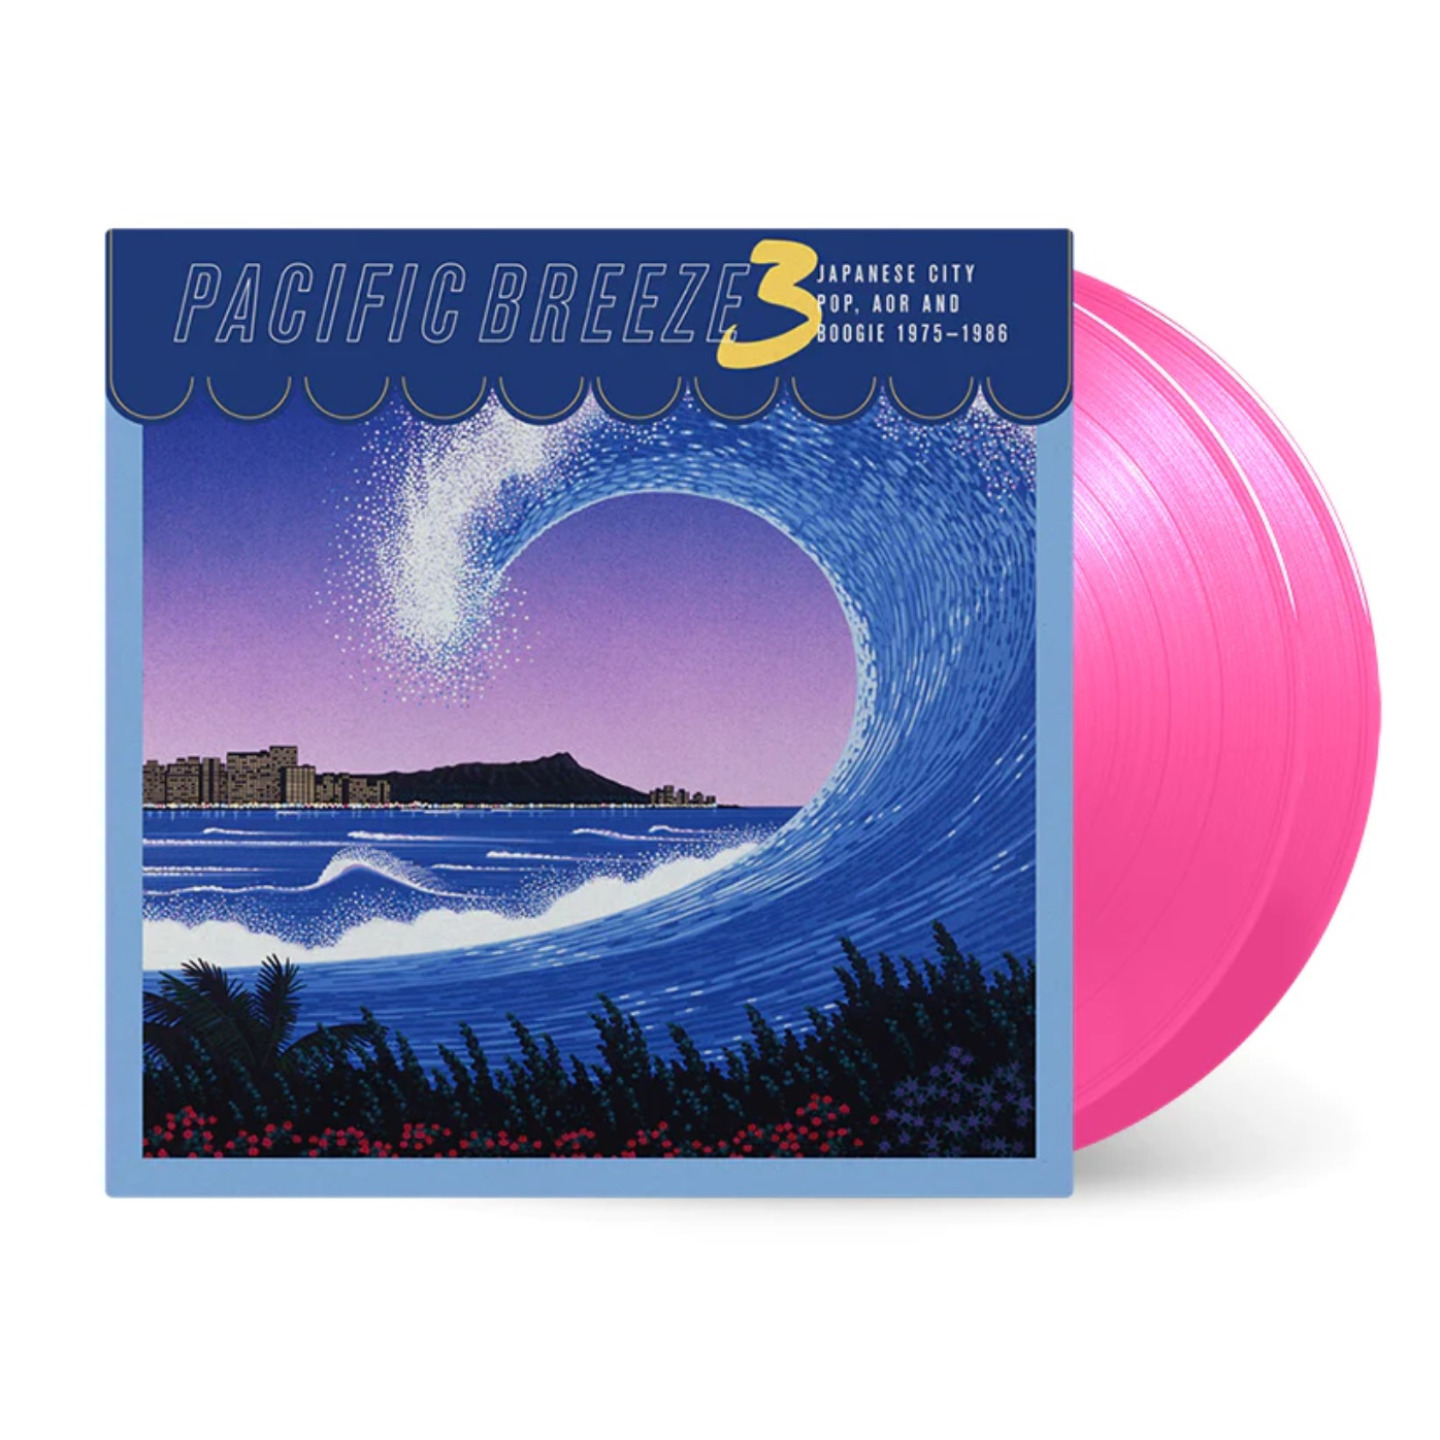 VA - Pacific Breeze 3 Japanese City Pop, AOR & Boogie 1975-1987 2xLP Twilight Sunset Pink Vinyl